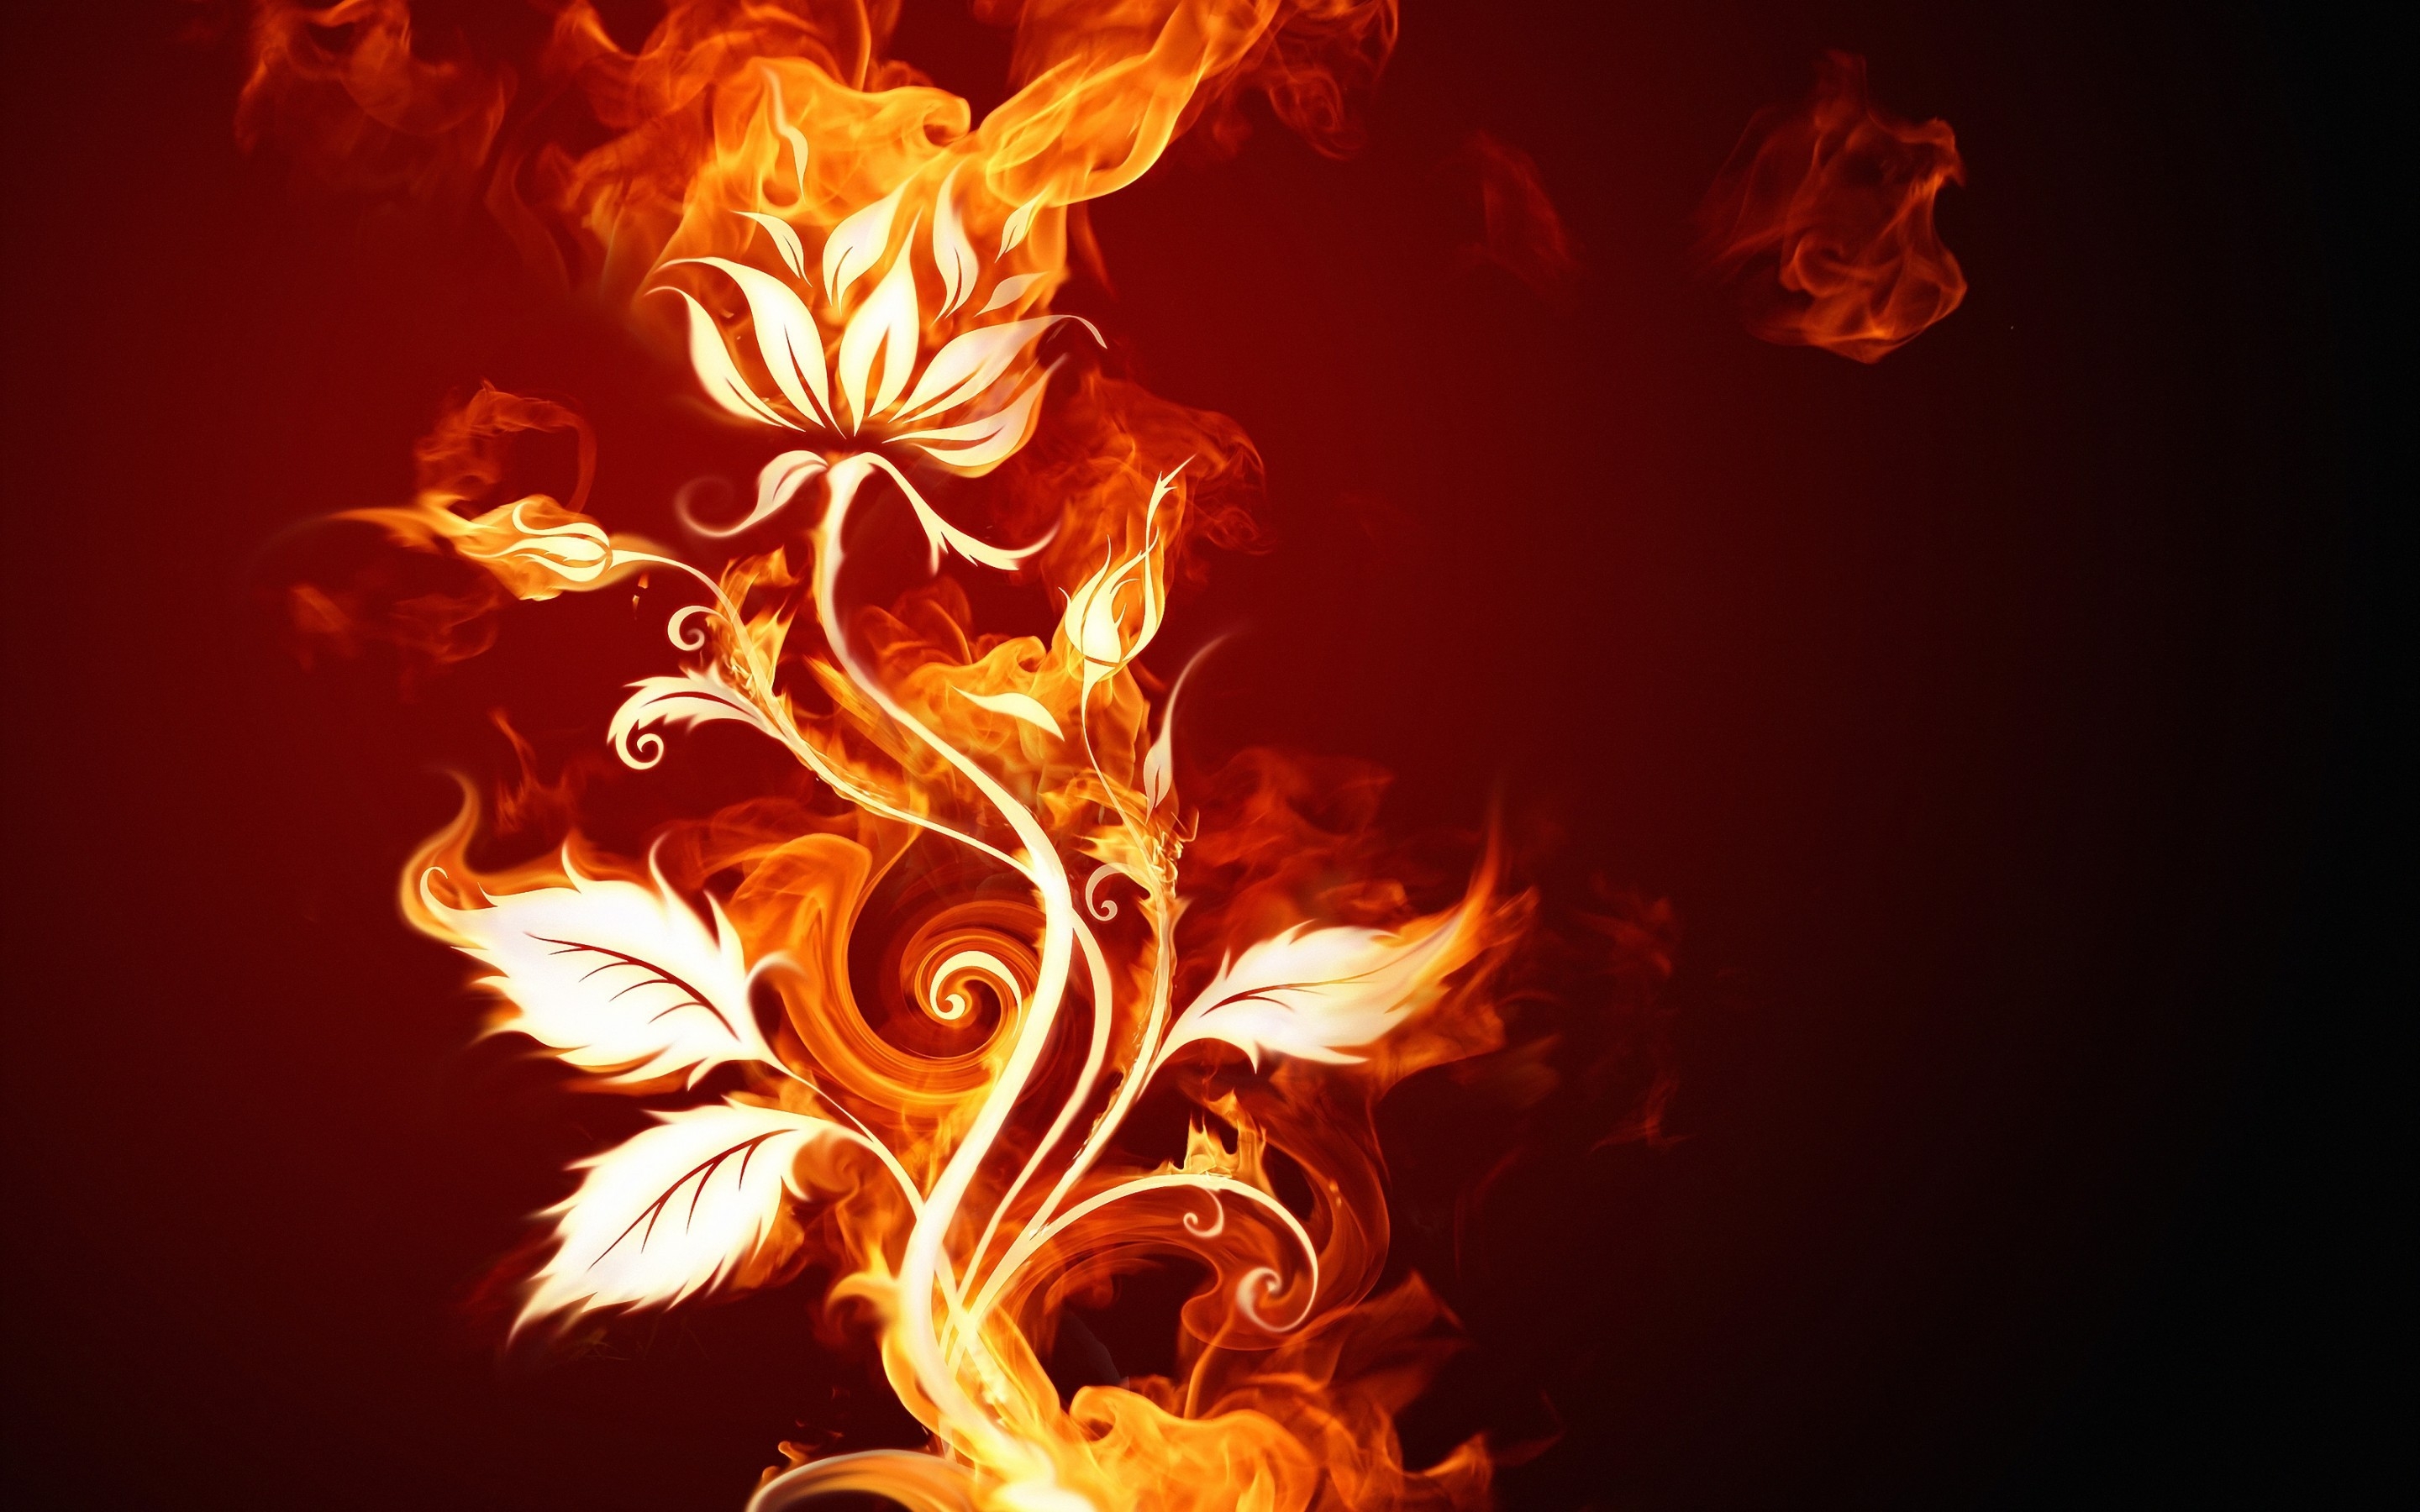 Burning Flower for 2880 x 1800 Retina Display resolution